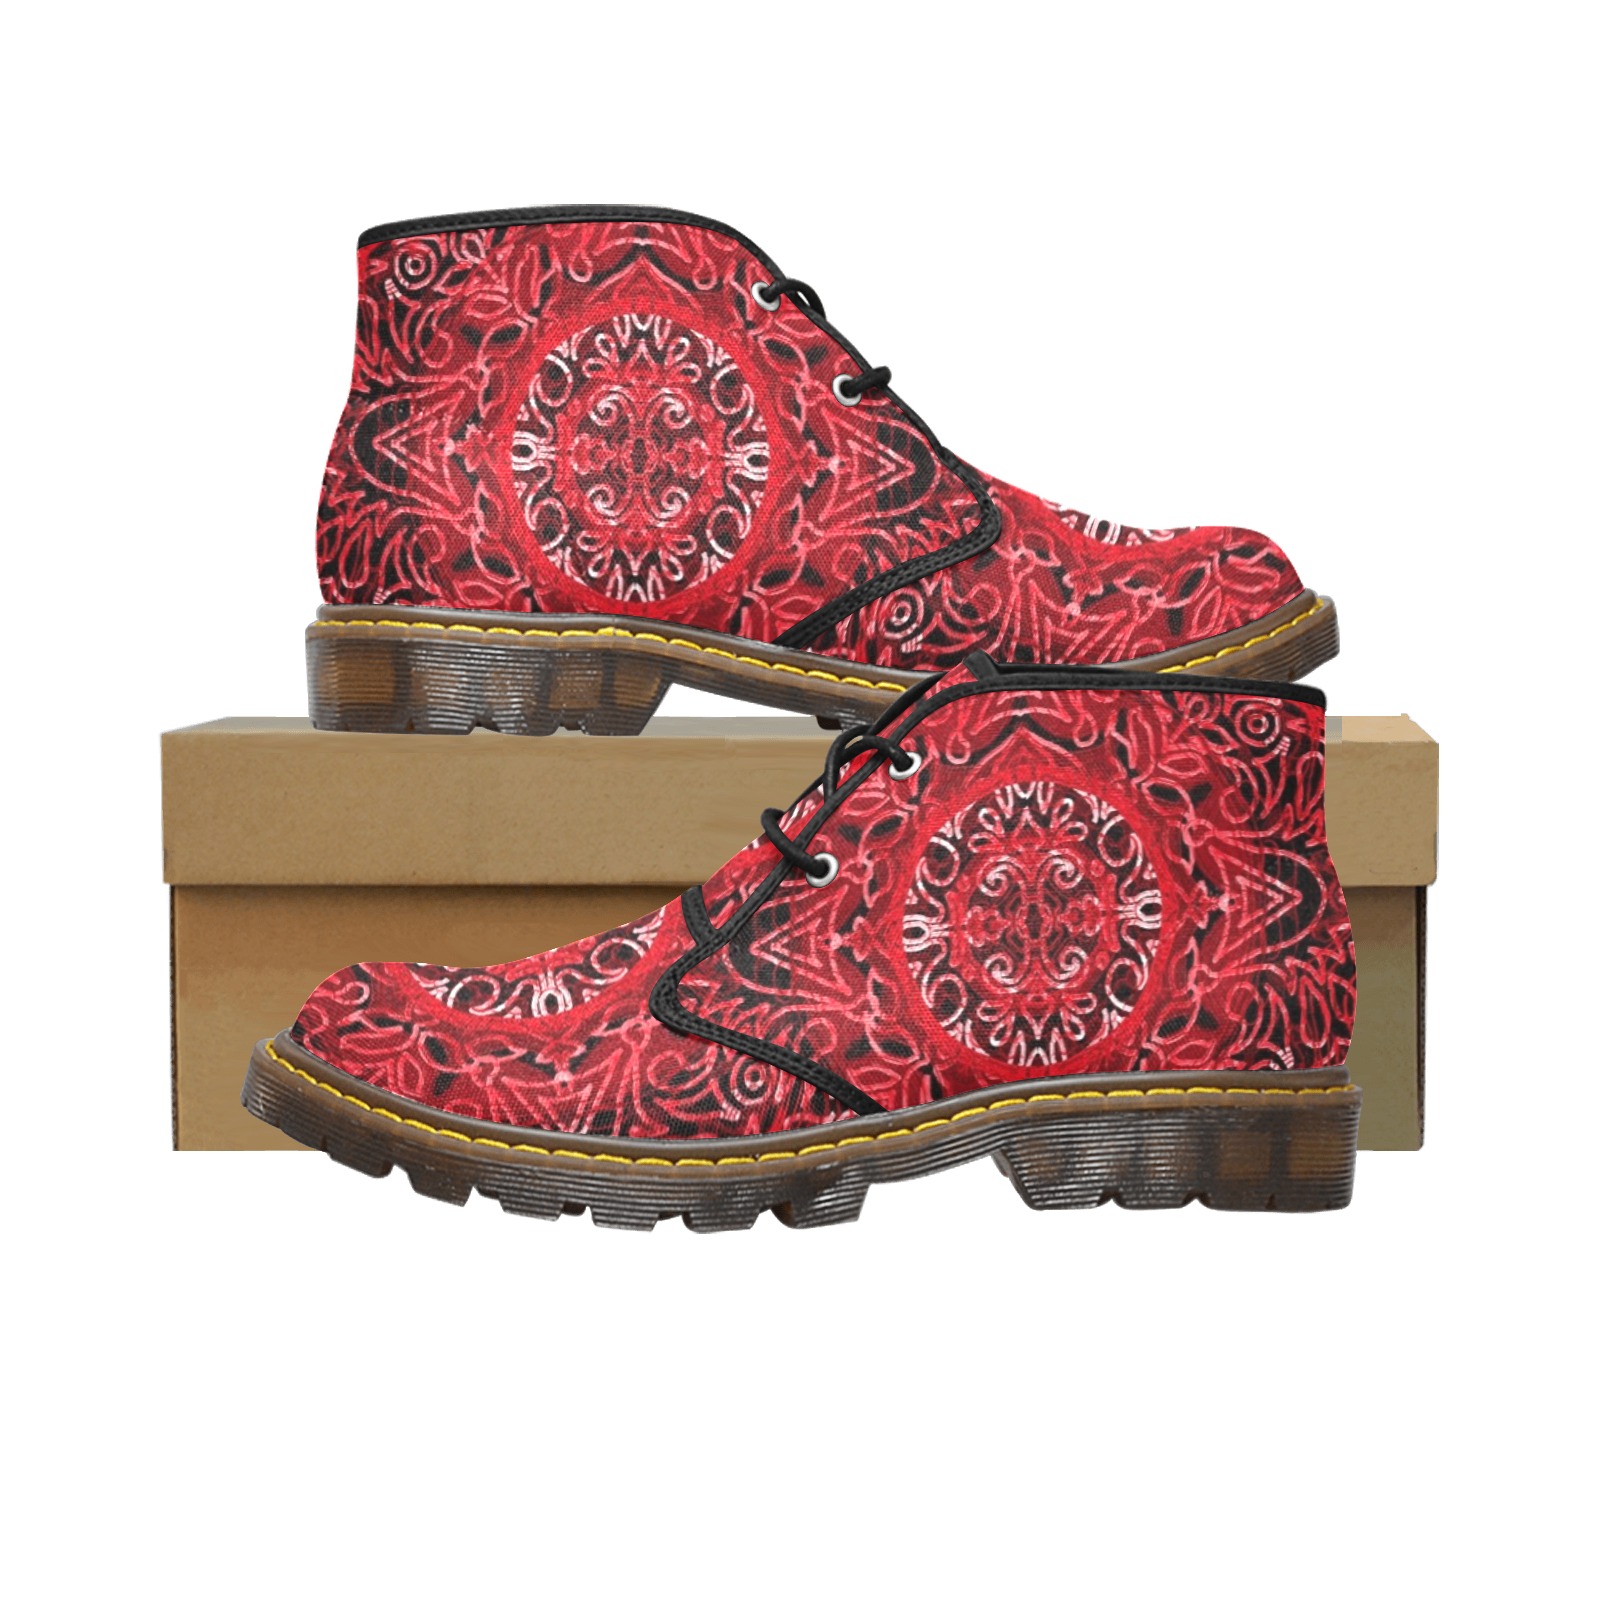 labytinthe 9 Women's Canvas Chukka Boots (Model 2402-1)